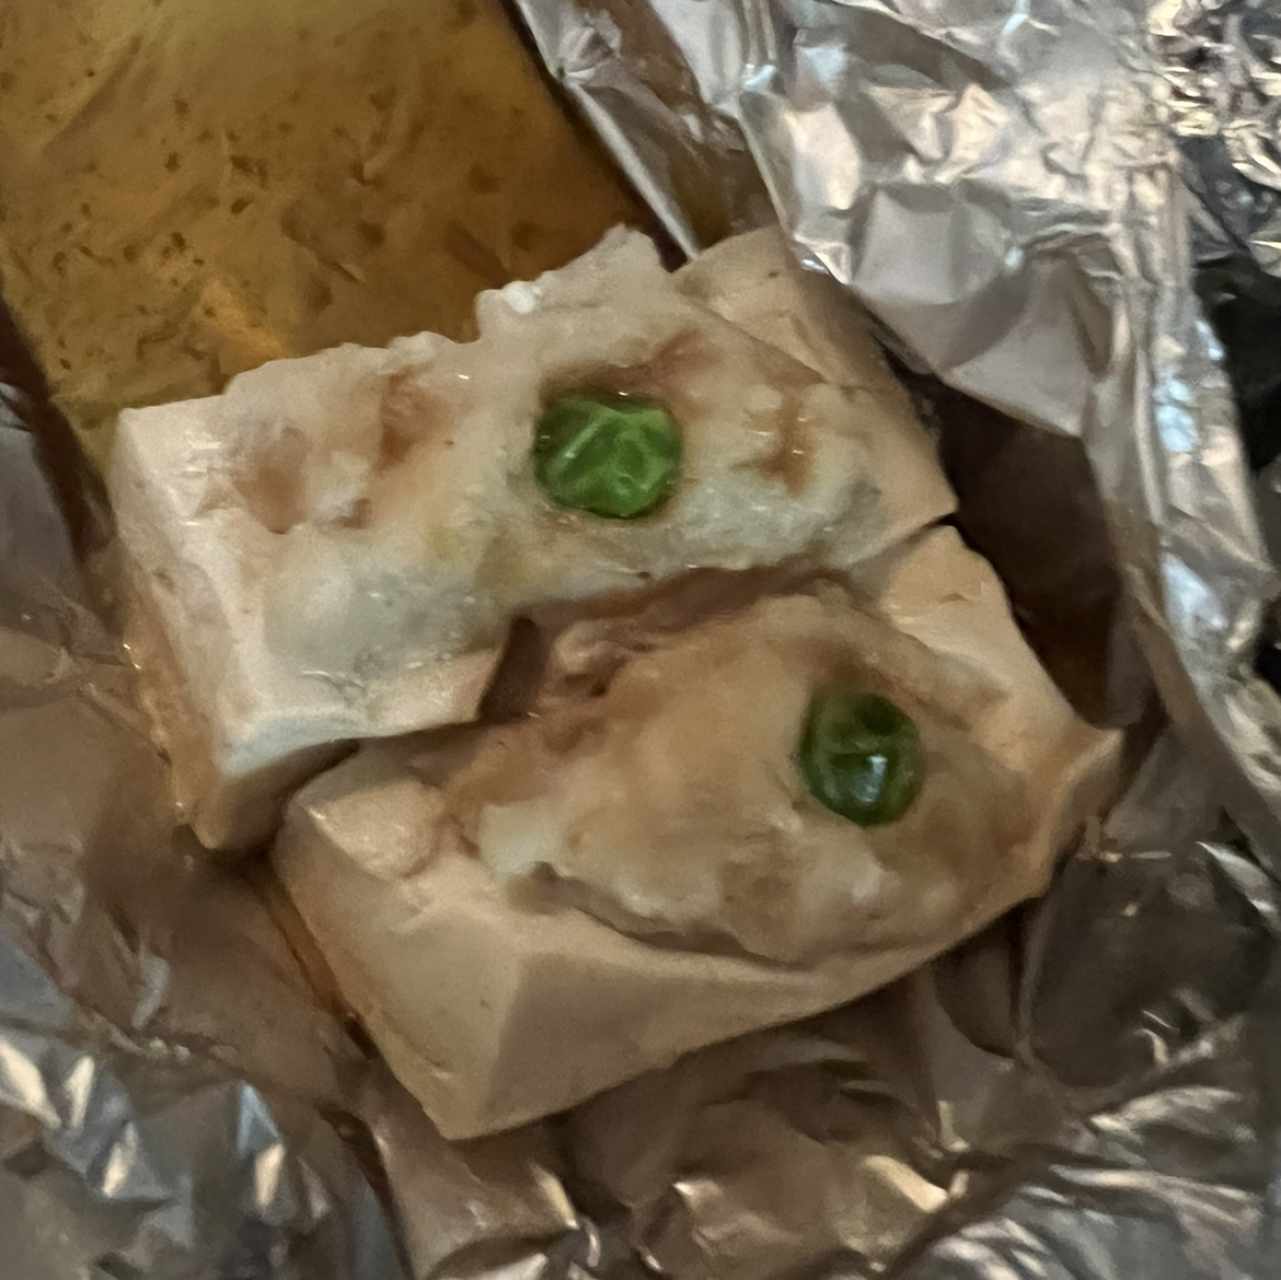 Tofu Relleno al Vapor